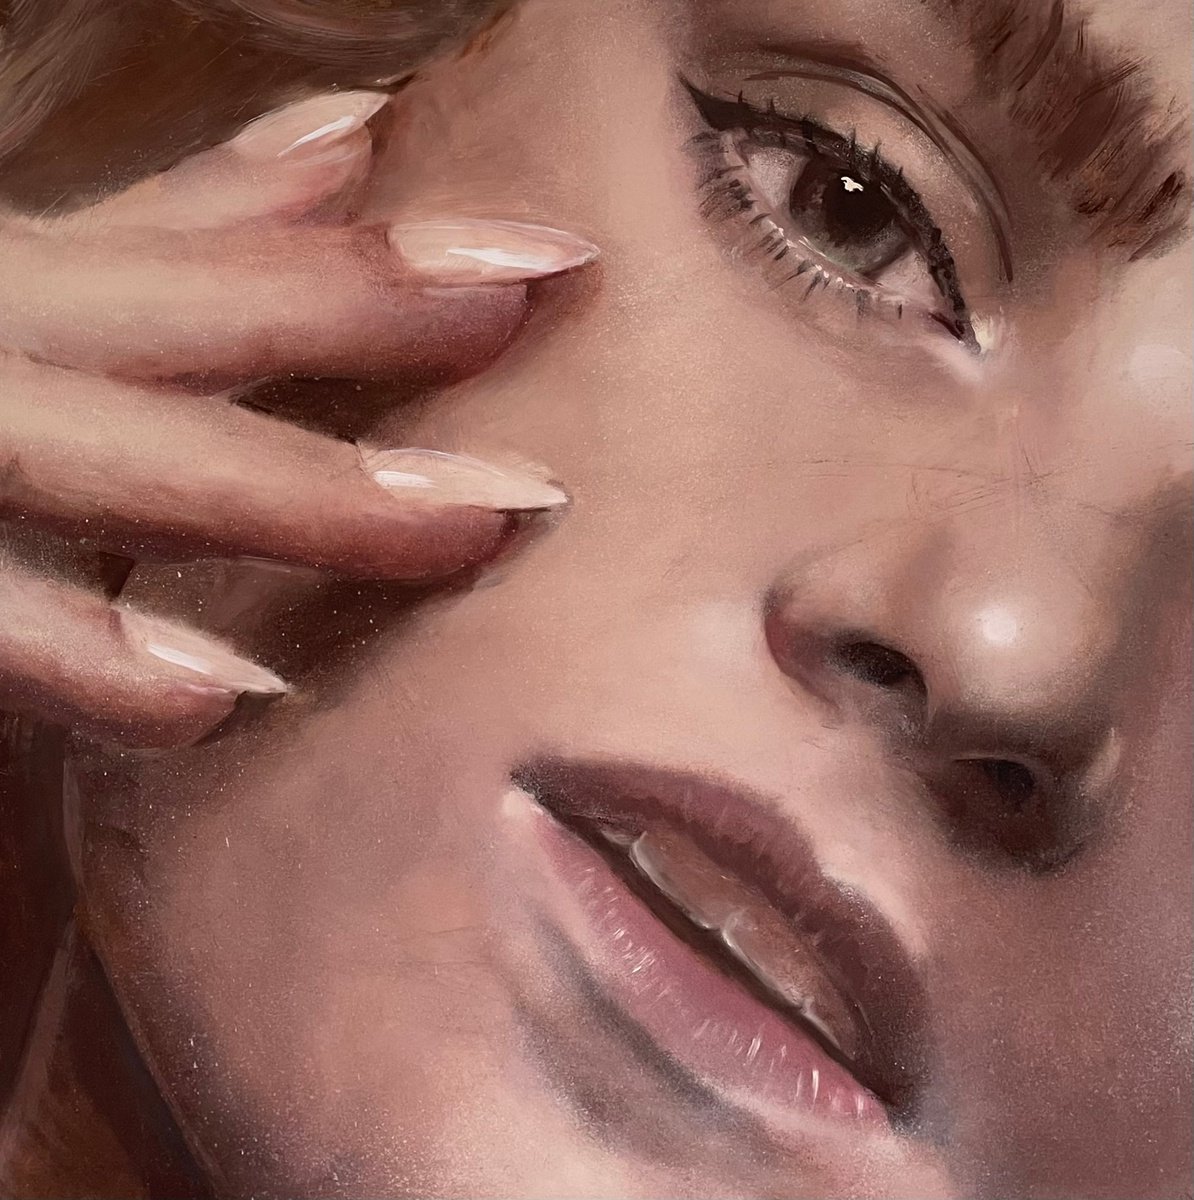 close up female portrait blonde woman staring lips portraiture oil on canvas painting by Renske Karlien Hercules